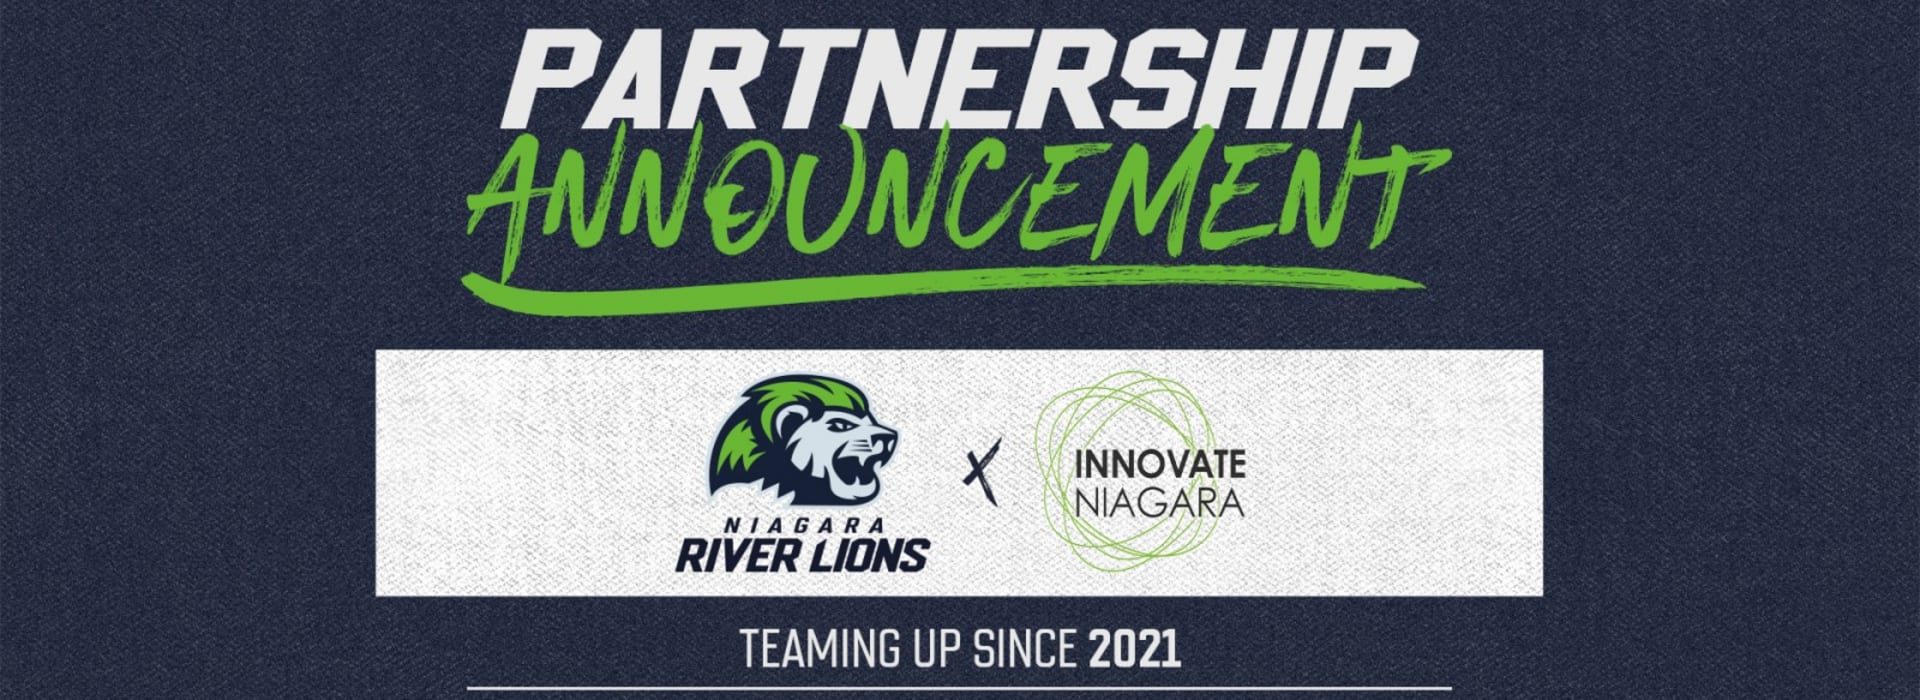 Innovate Niagara Partnership with Niagara River Lions